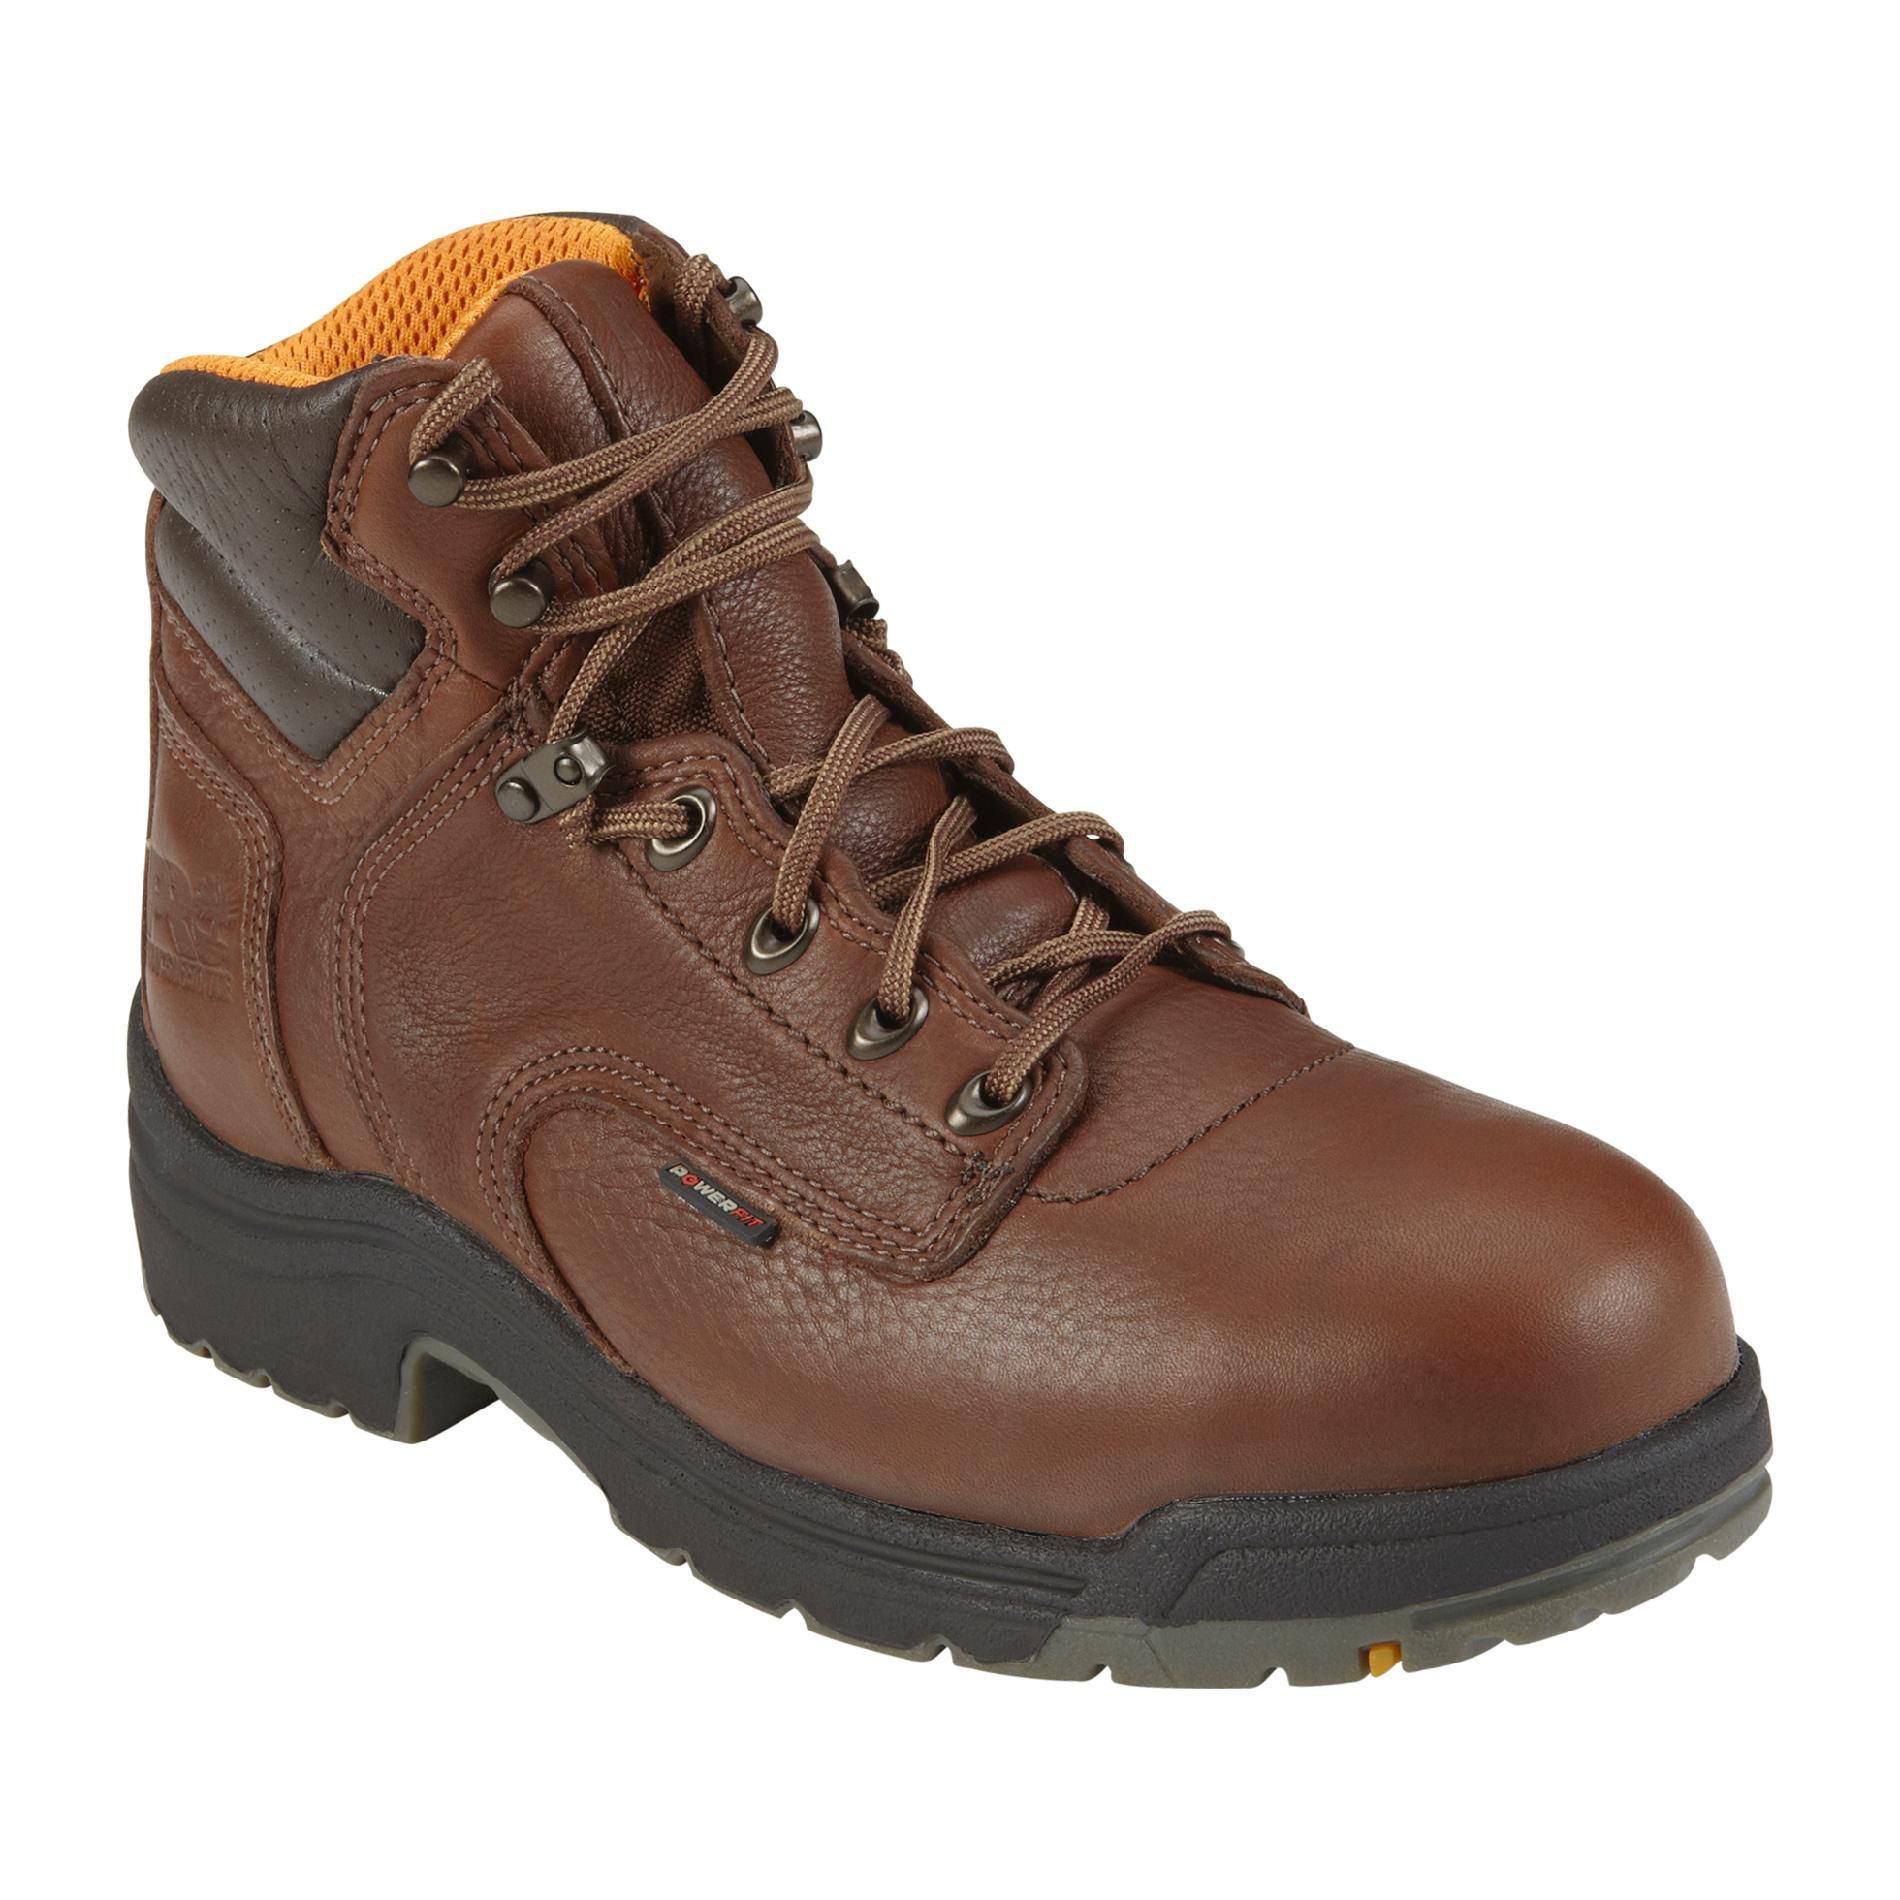 Timberland PRO Men's Work Boot 6" TiTAN Safety Toe - Brown